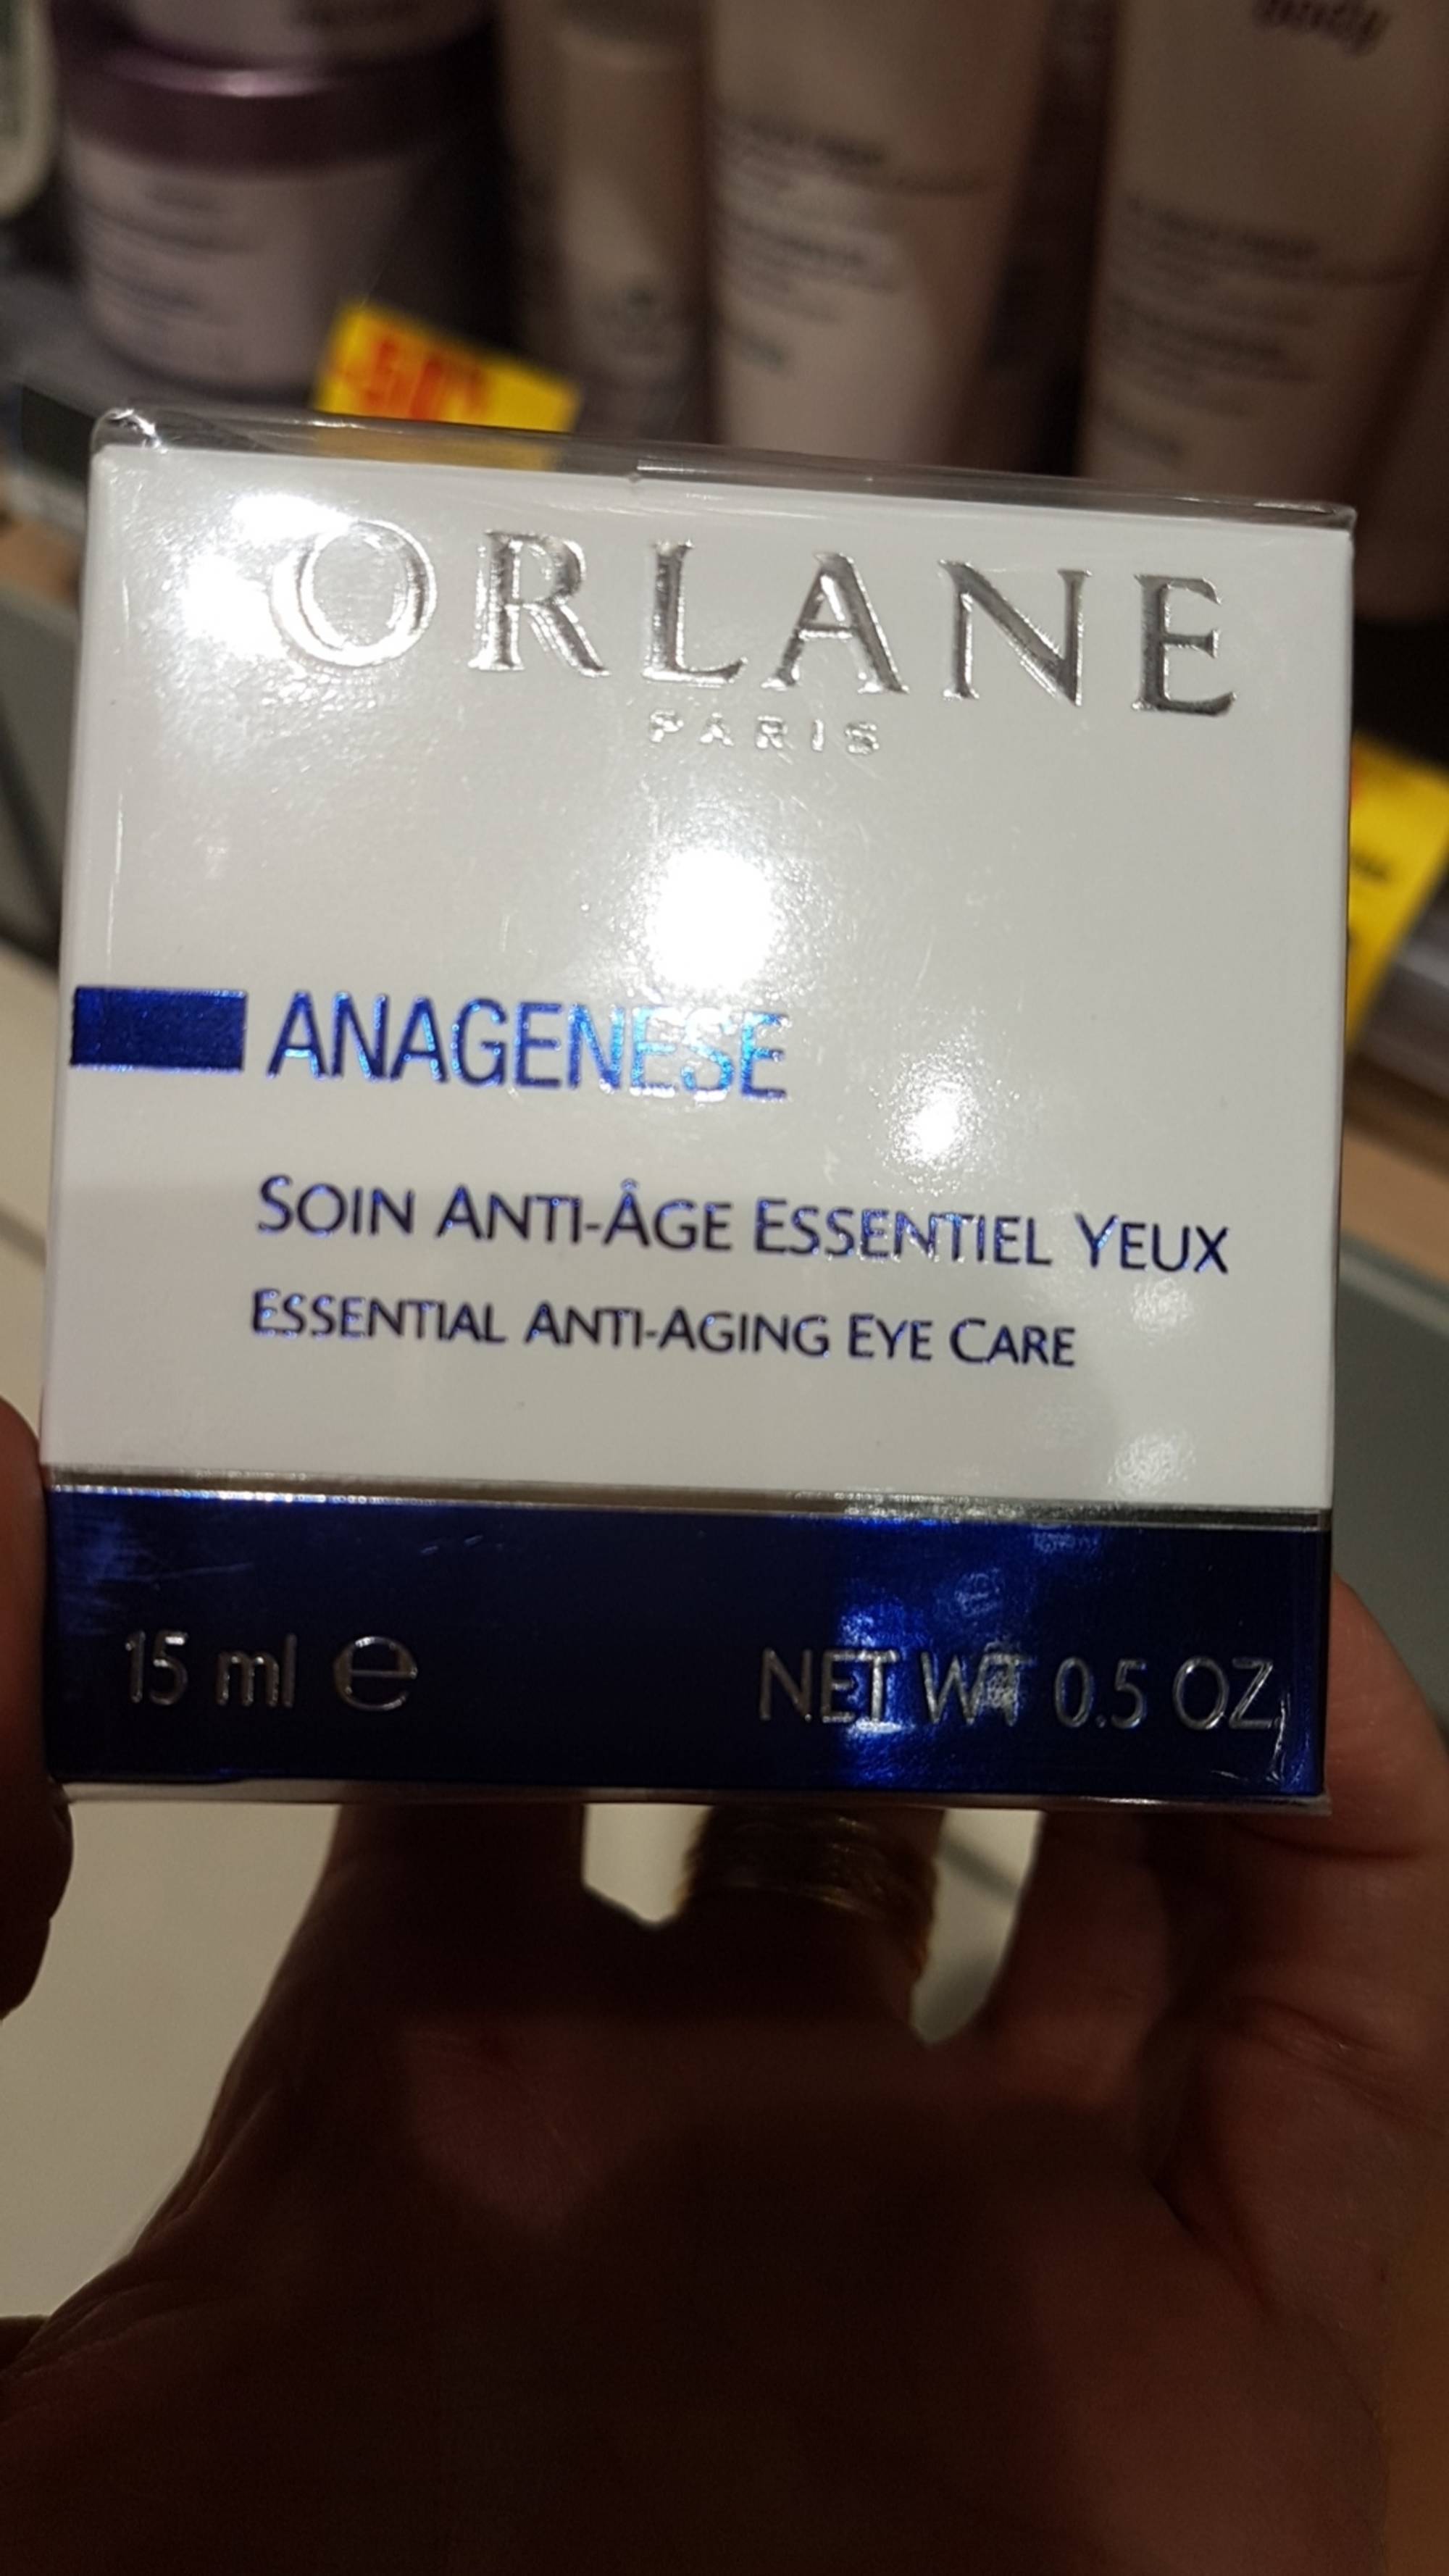 ORLANE - Anagenèse - Soin anti-âge essentiel yeux